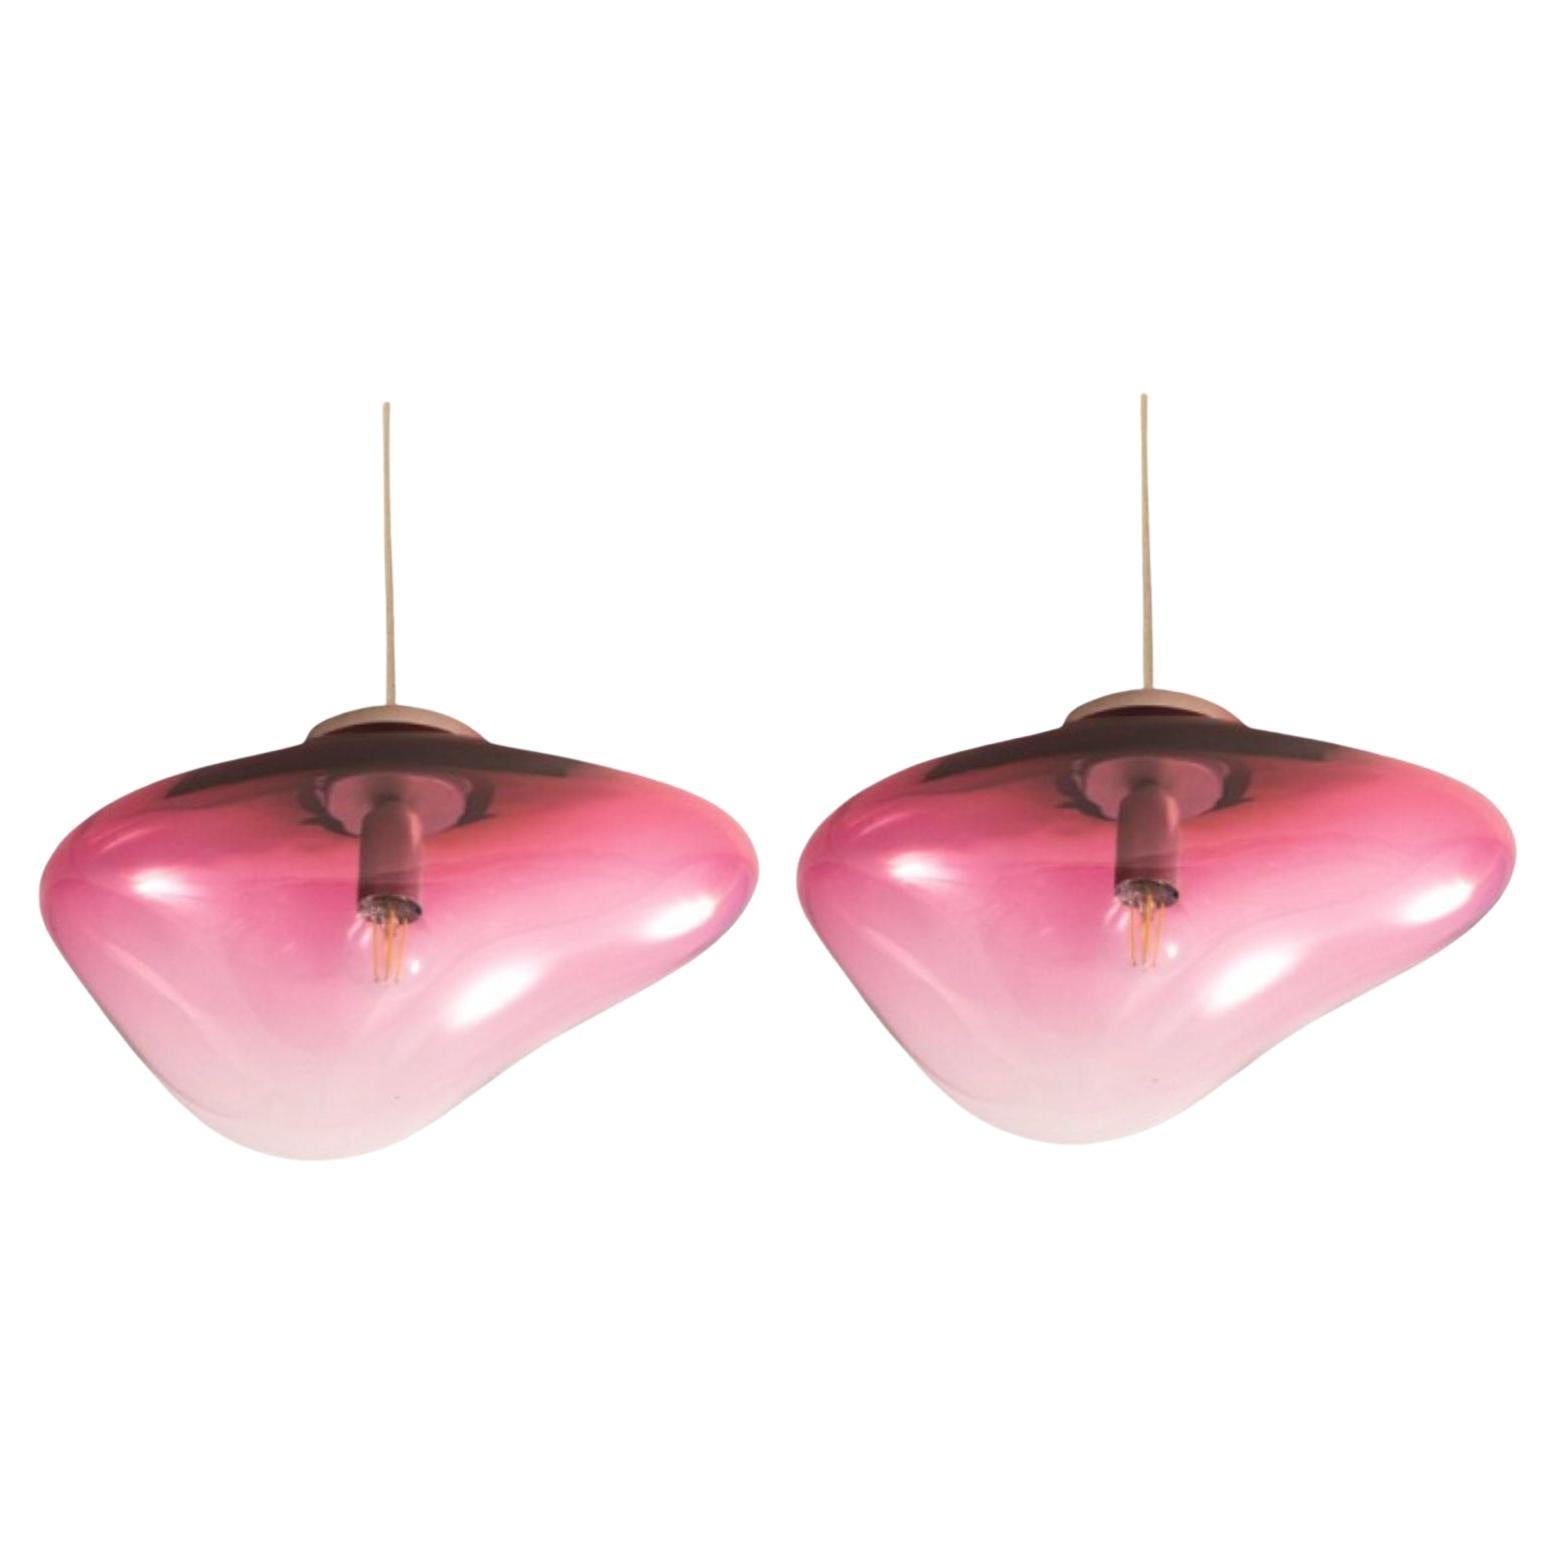 Set of 2 Planetoide Erosi Brilliant Ruby Pendants by Eloa For Sale